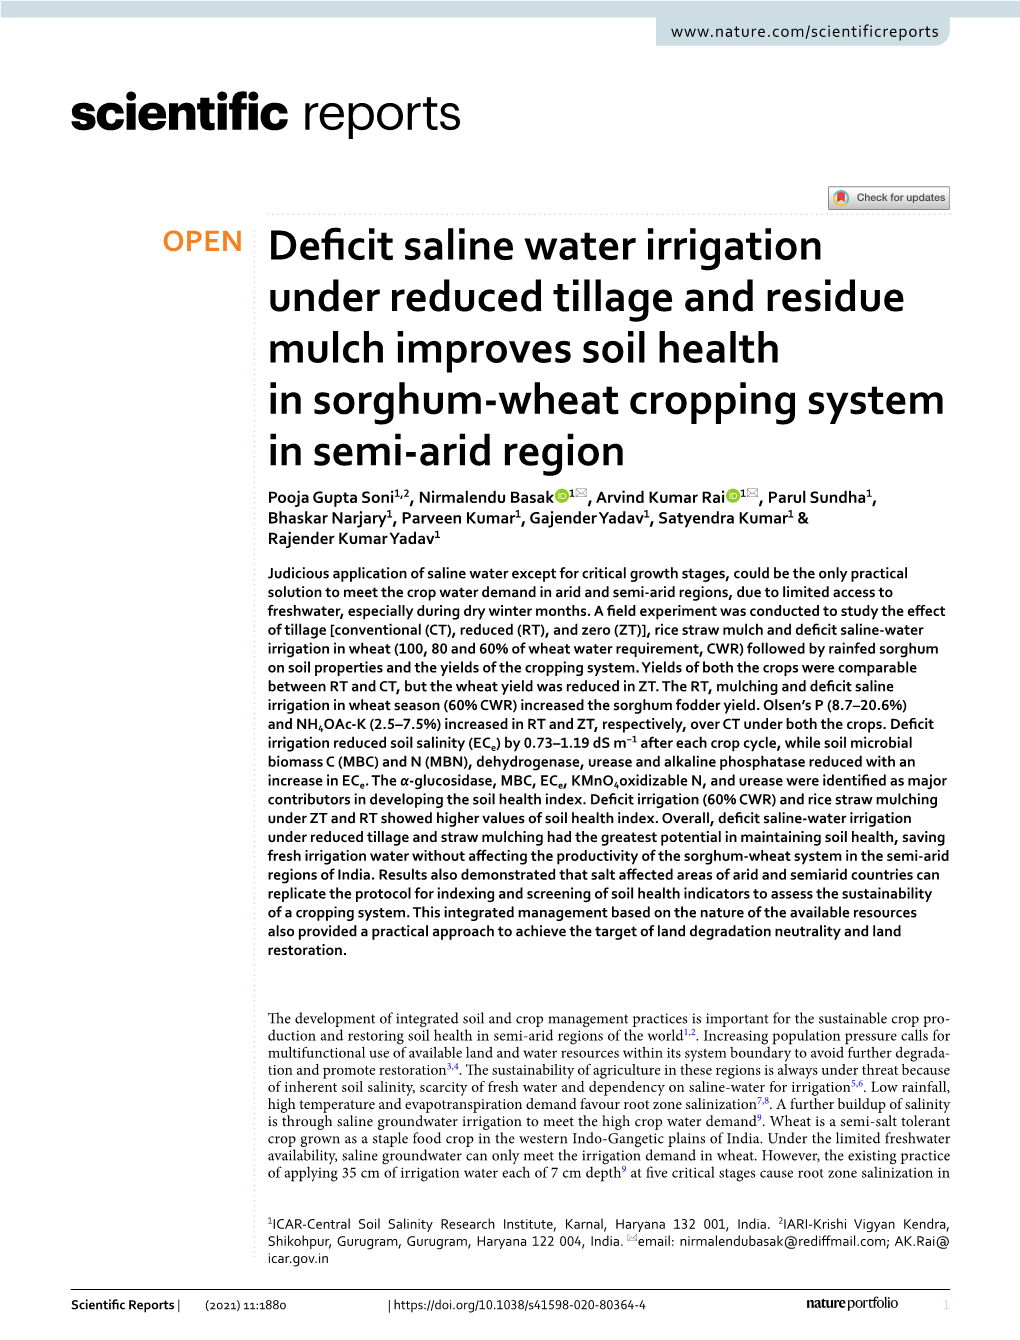 Deficit Saline Water Irrigation Under Reduced Tillage and Residue Mulch